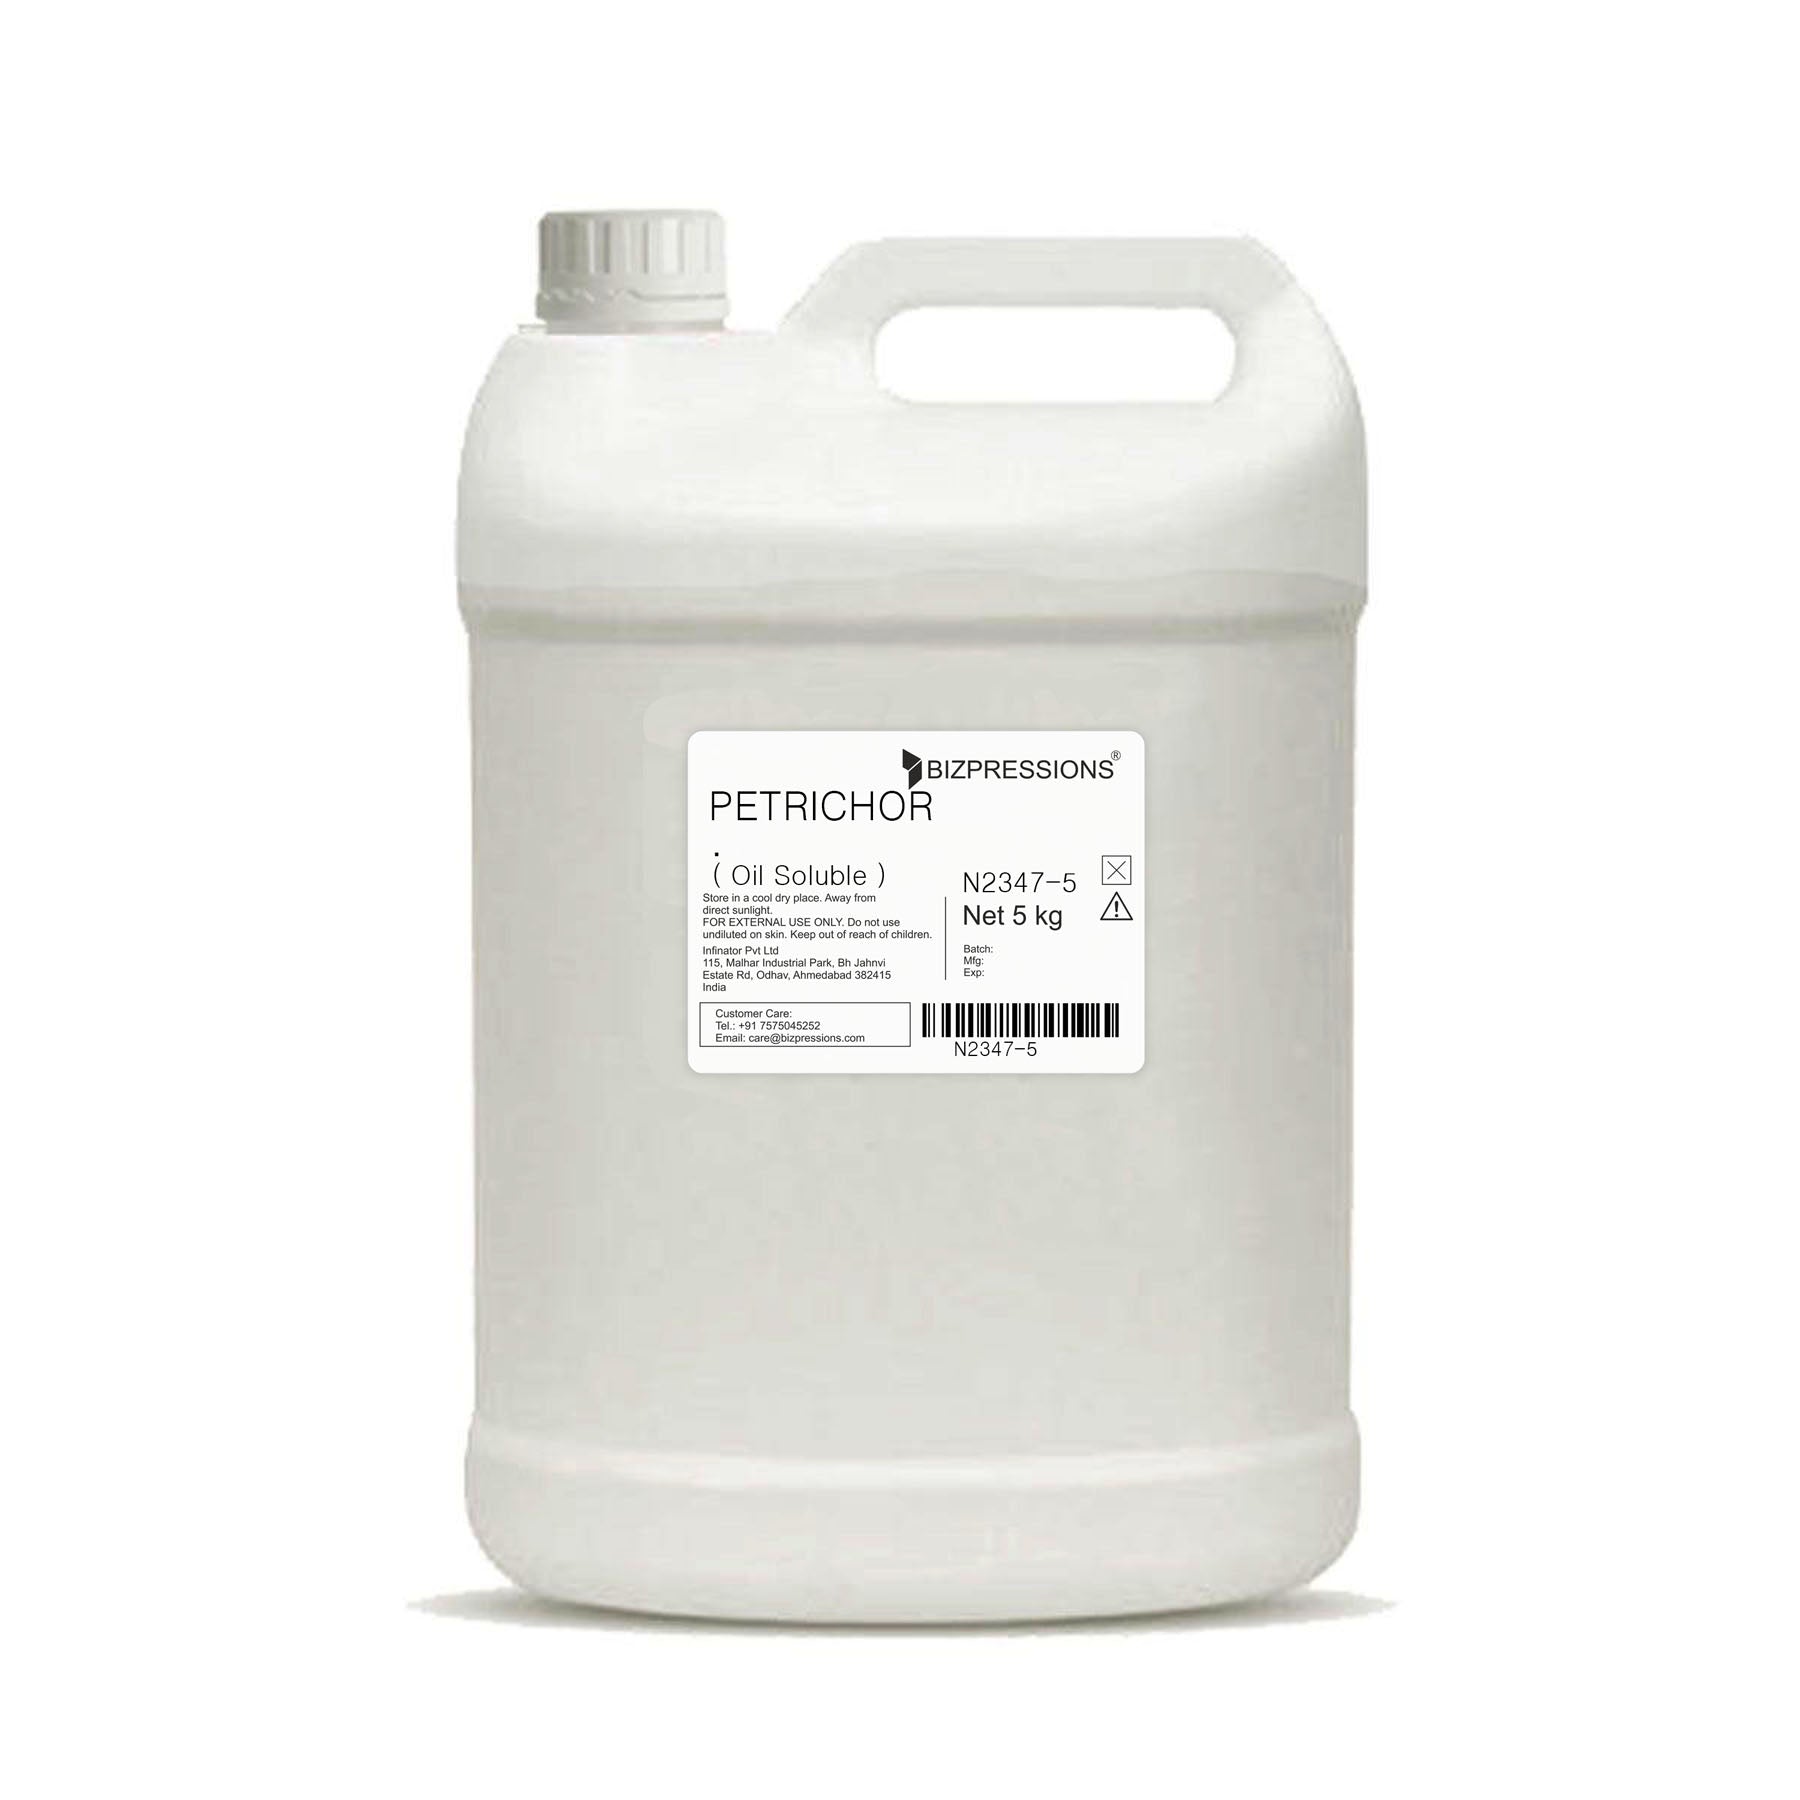 PETRICHOR - Fragrance ( Oil Soluble ) - 5 kg